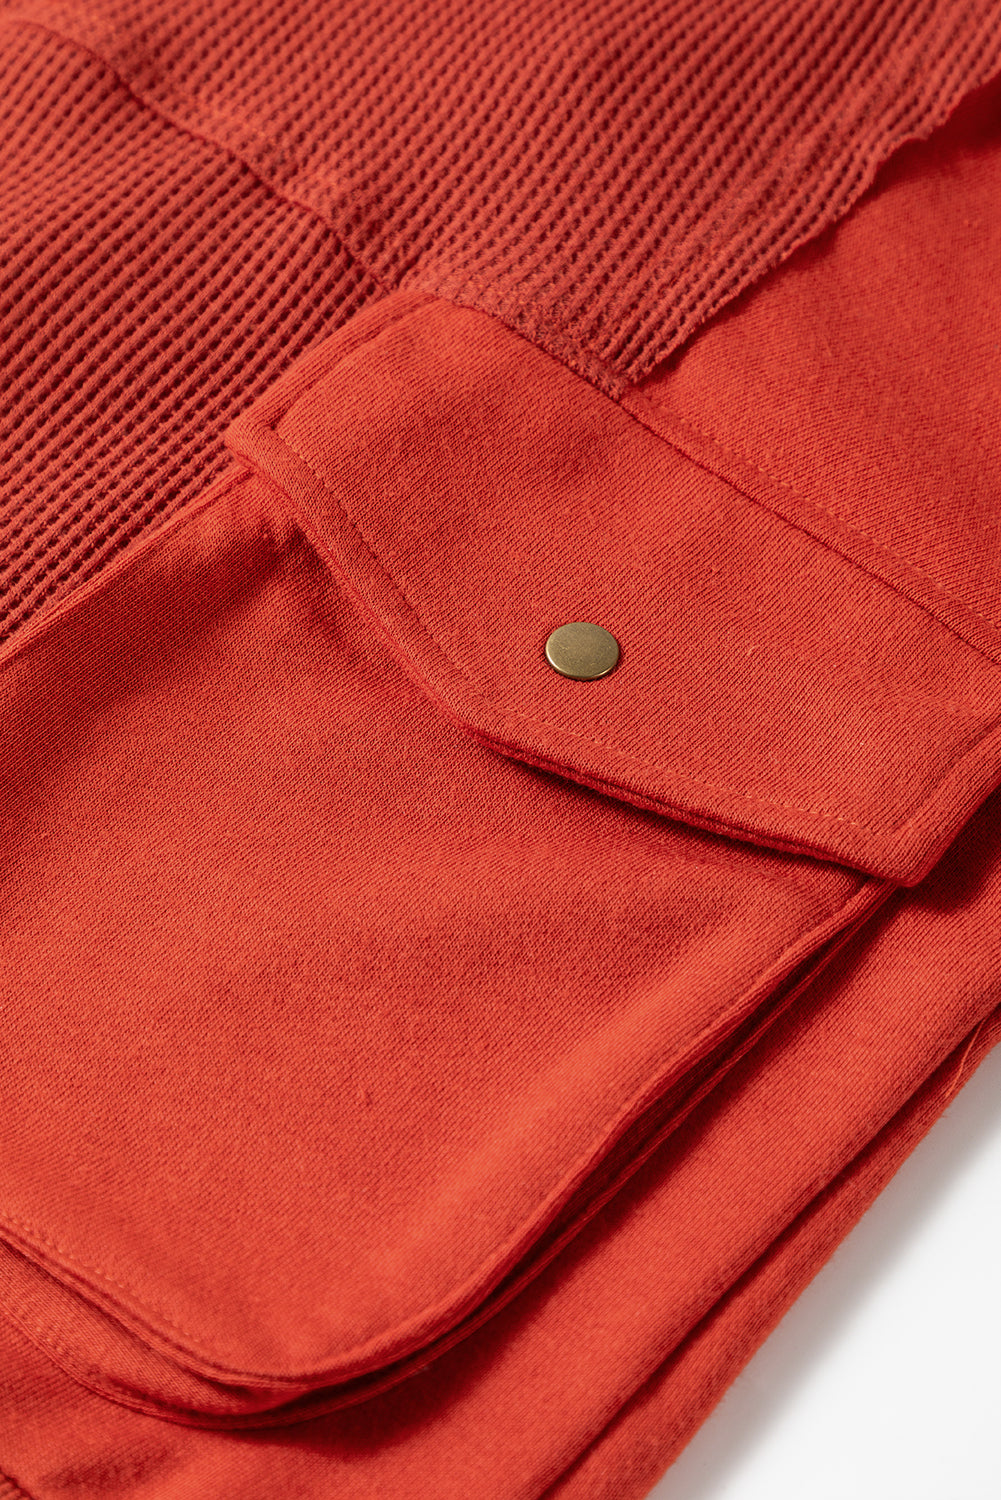 Red Dahlia Mineral Wash Zip up Sweatshirt